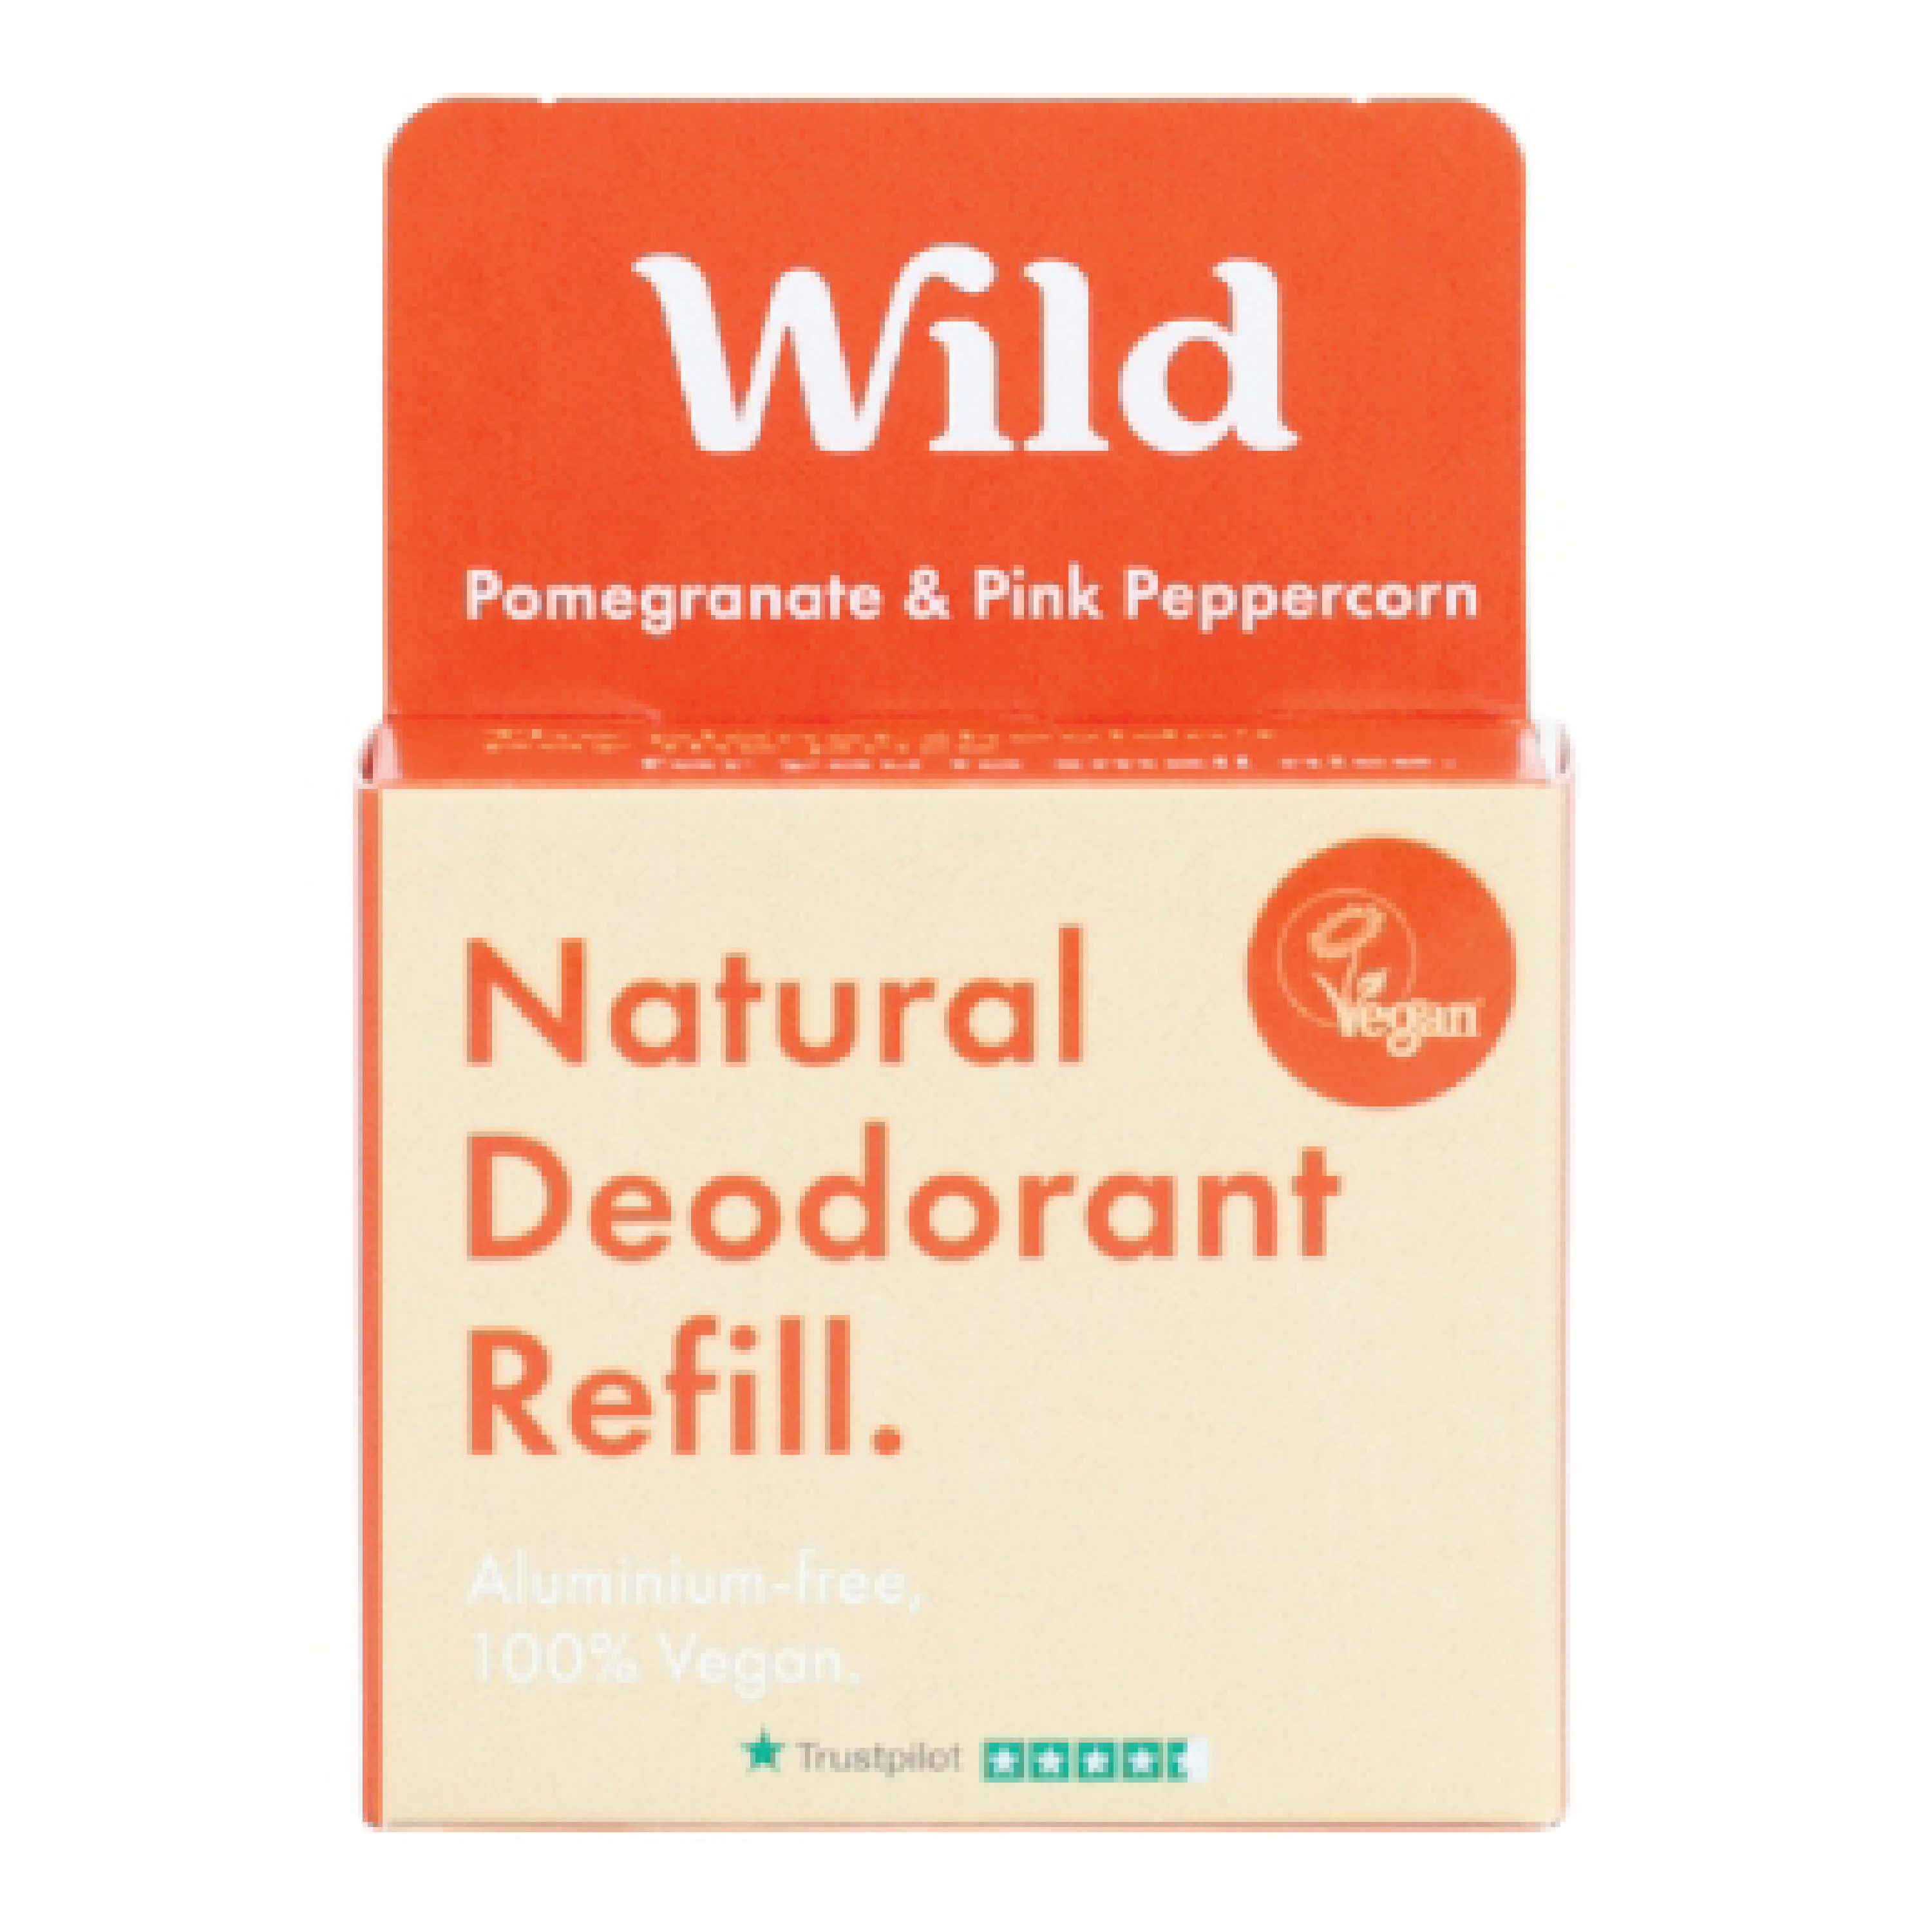 Wild Wild Deo Pomegranate & Pink Peppercorn refill, 40 gram